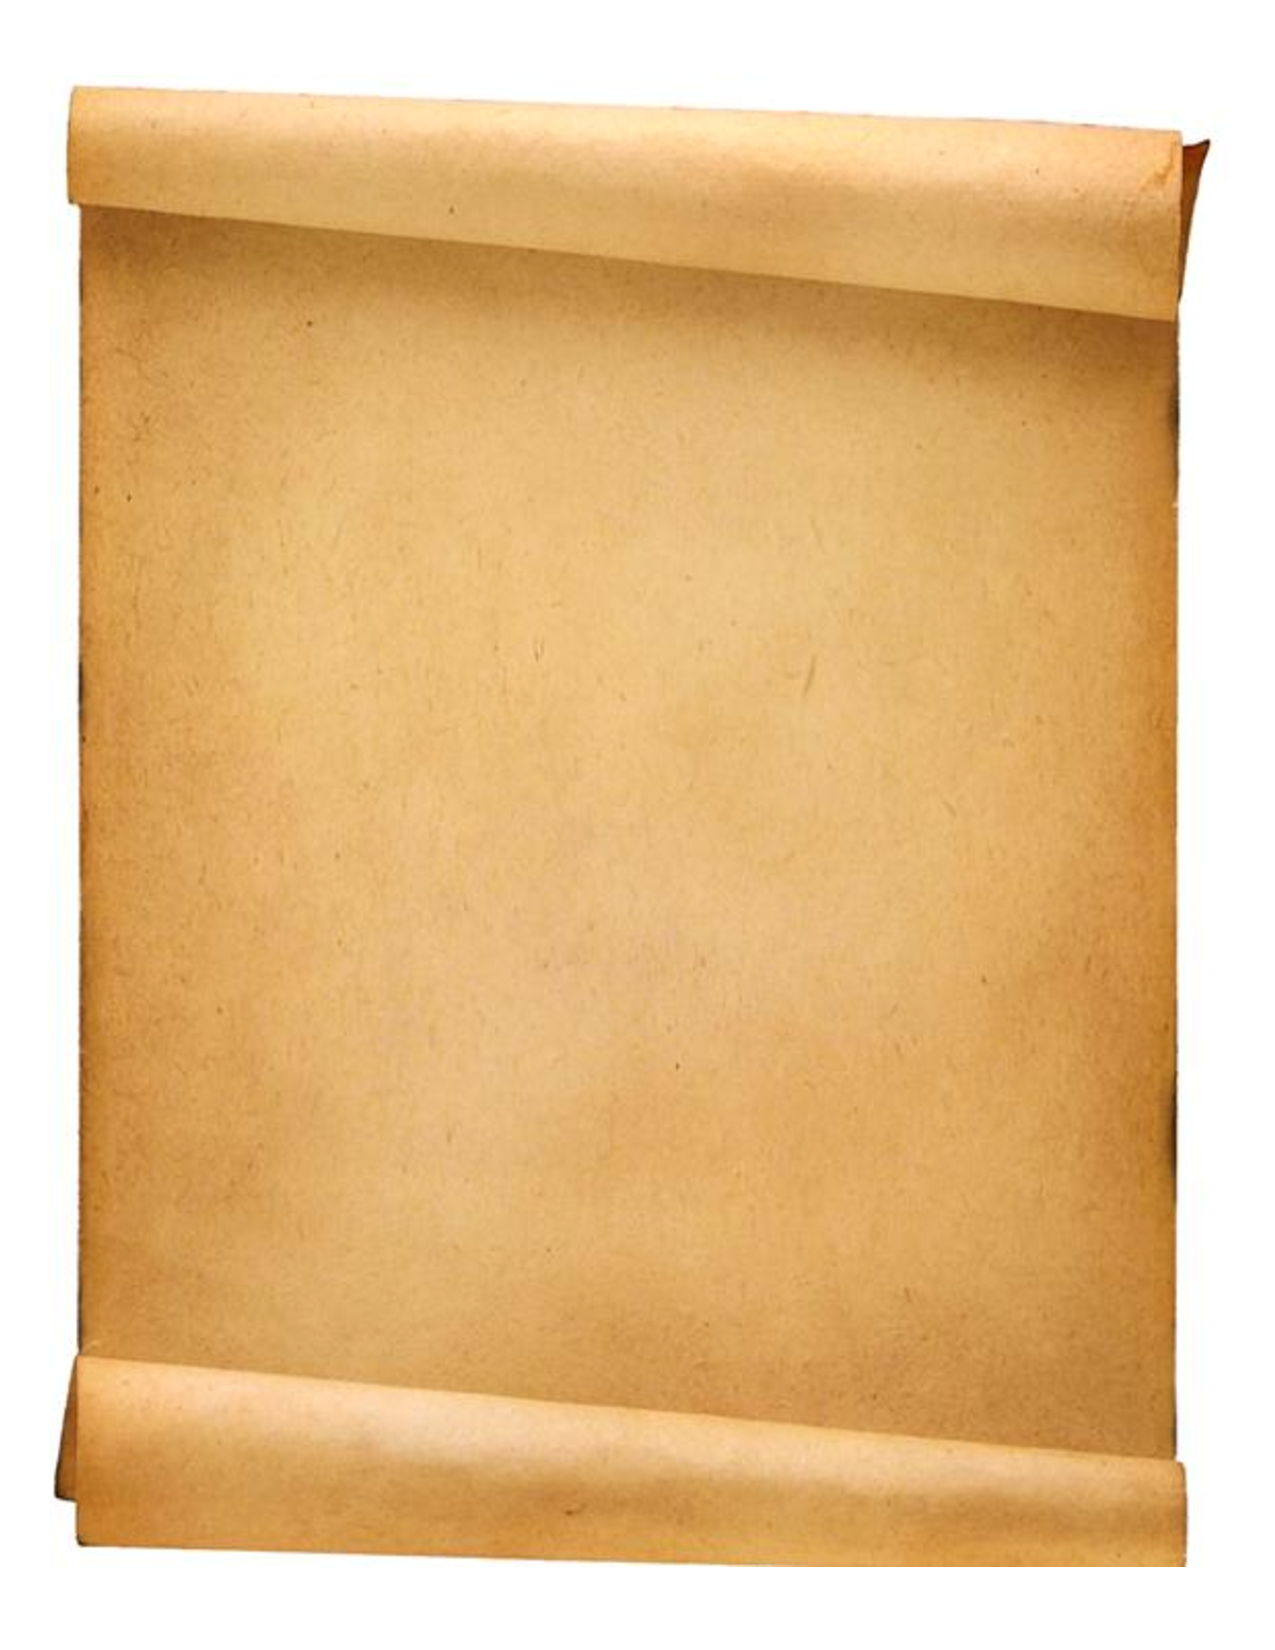 Blank Parchment Paper   Cliparts Co